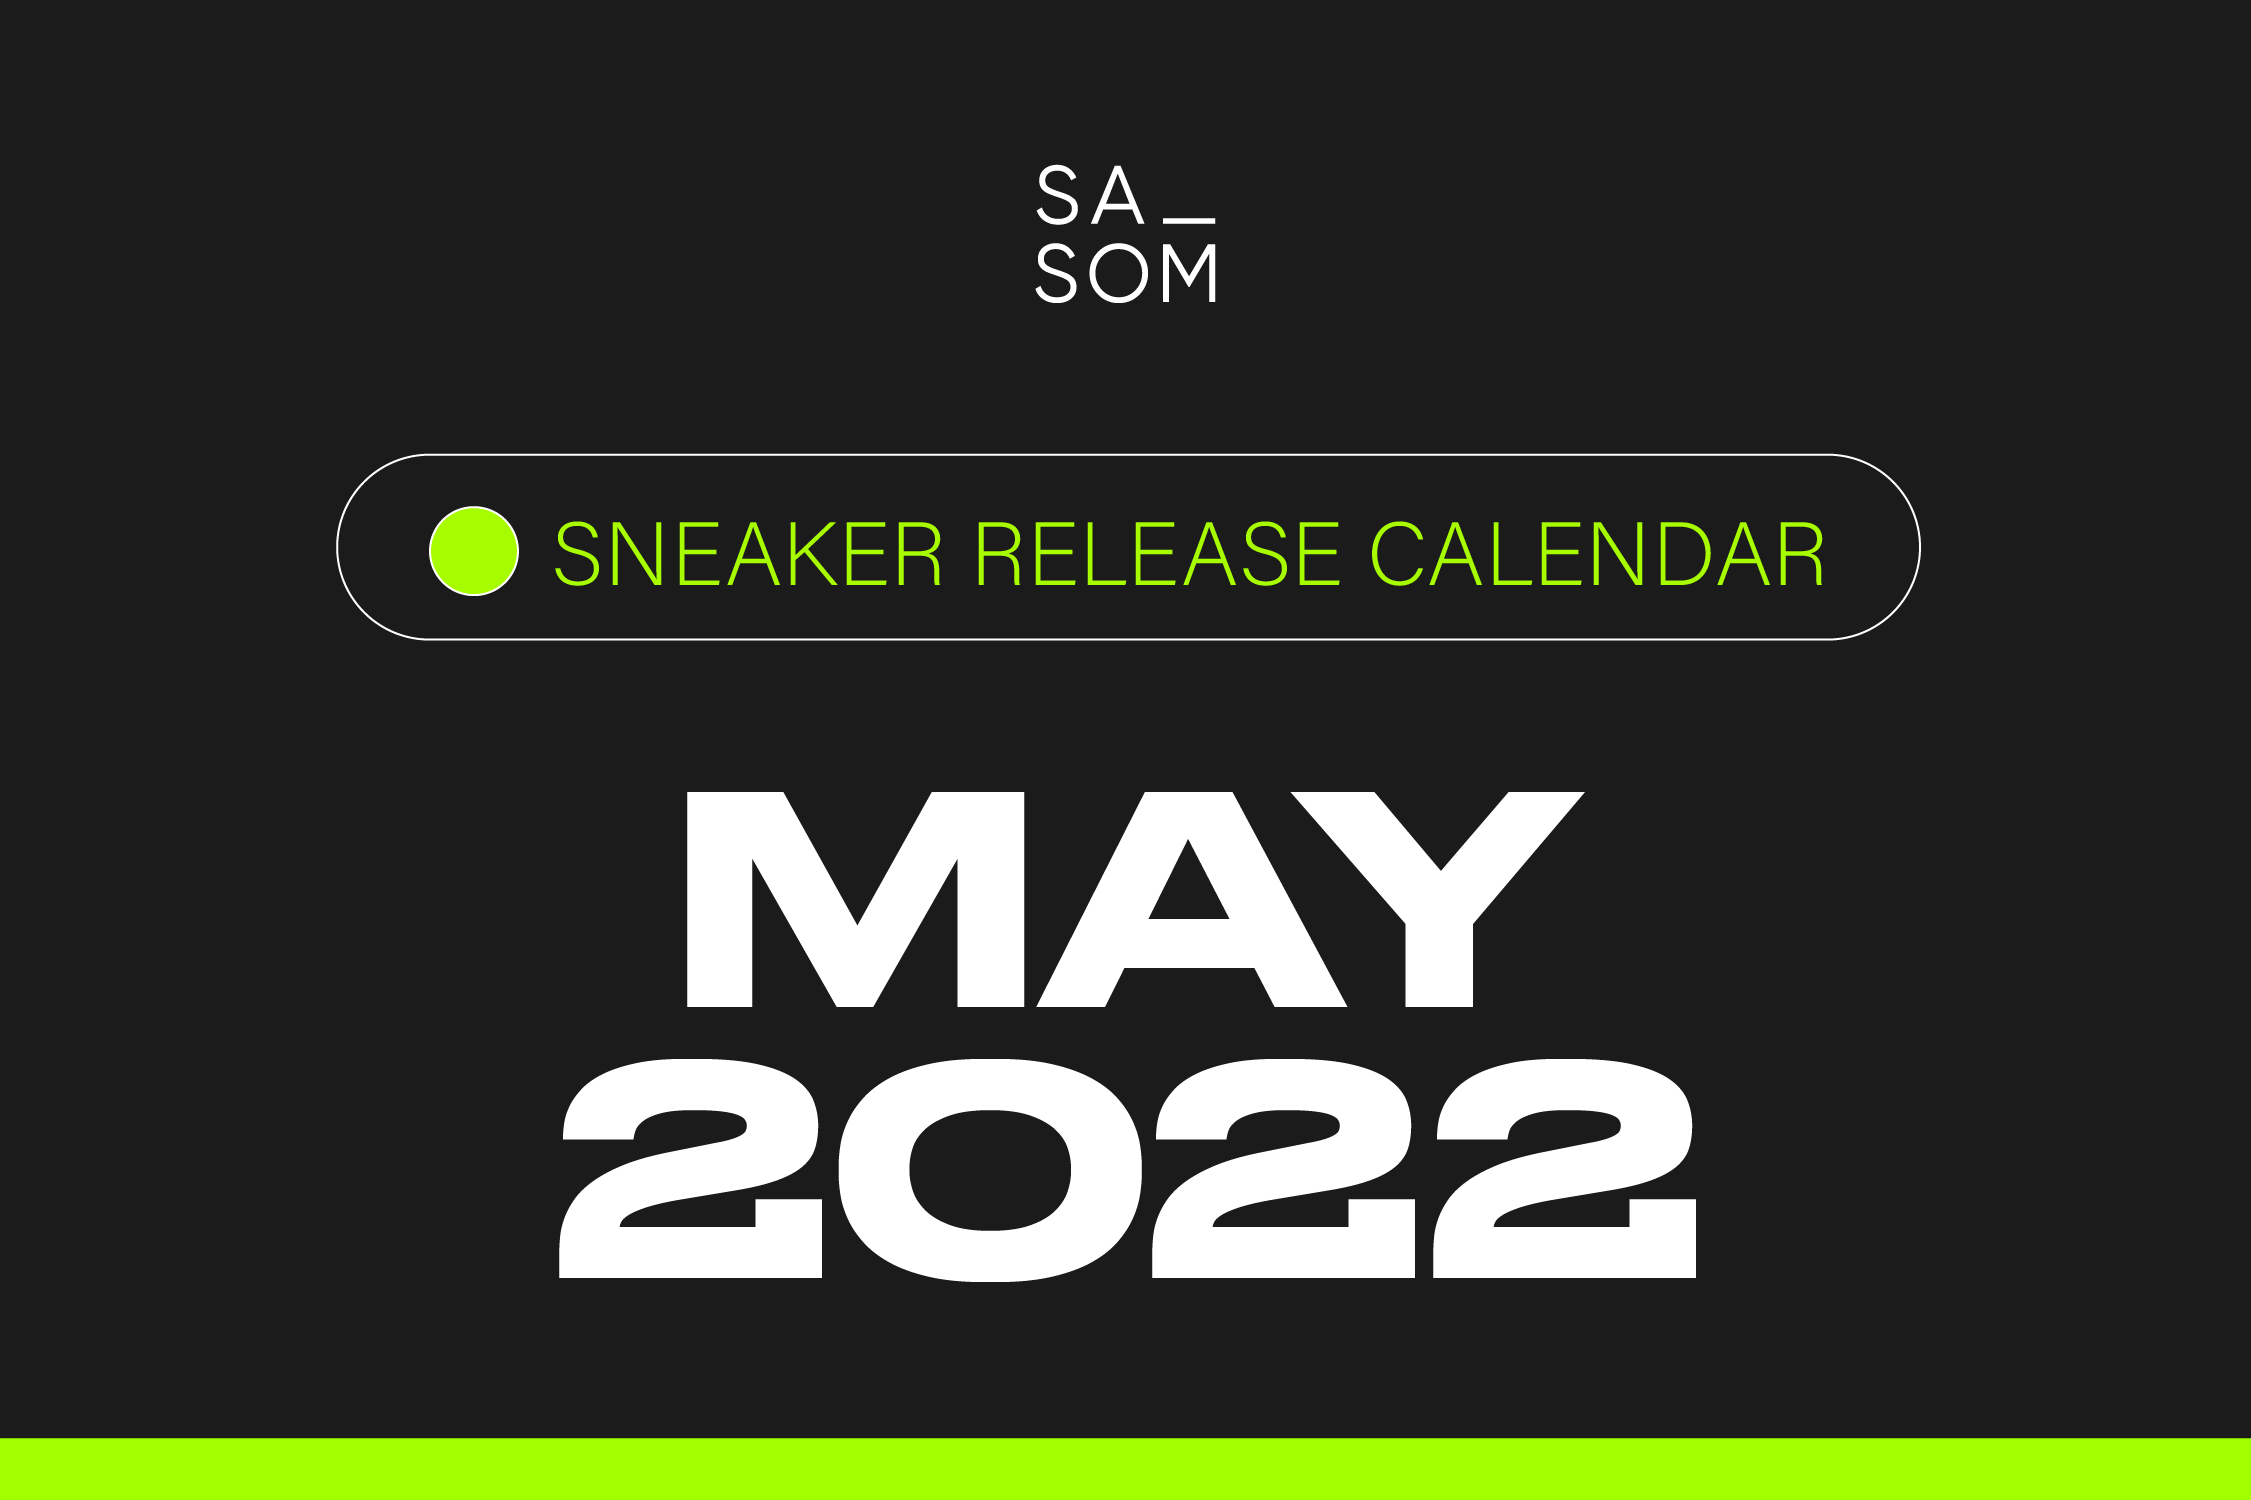 MAY 2022 SNEAKERS RELEASE CALENDAR